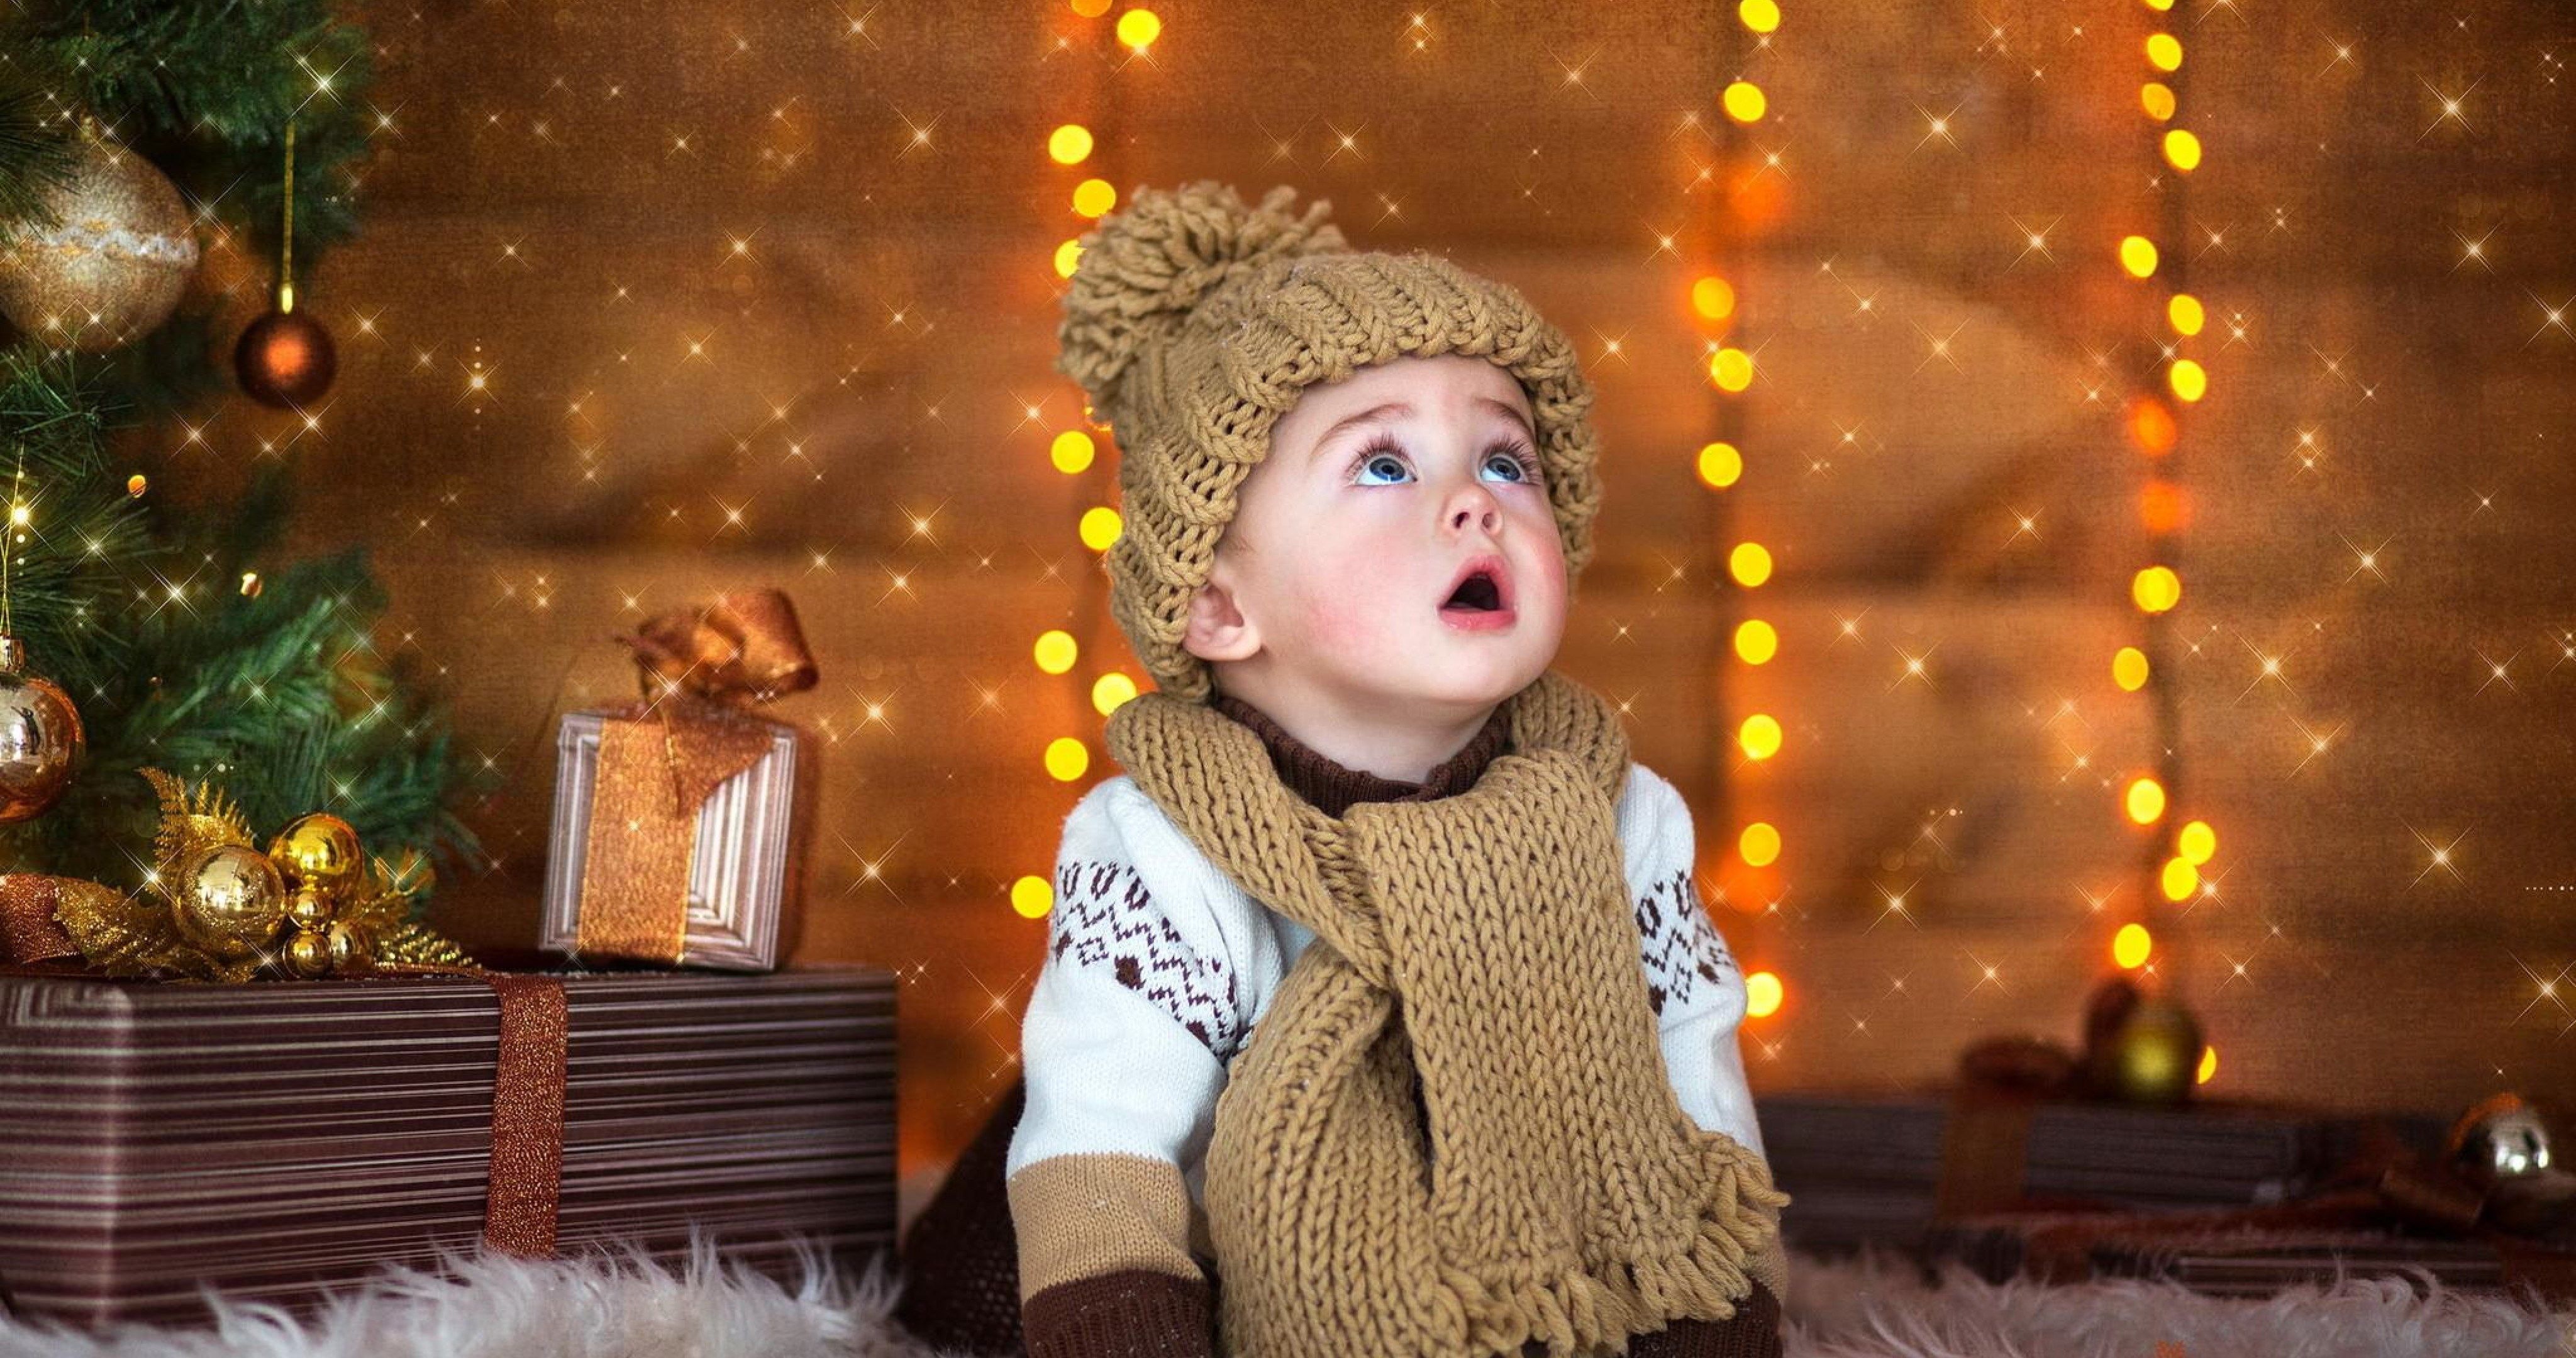 new year baby 4k ultra HD wallpaper. Cute baby wallpaper, Baby christmas outfit, Cute baby photo